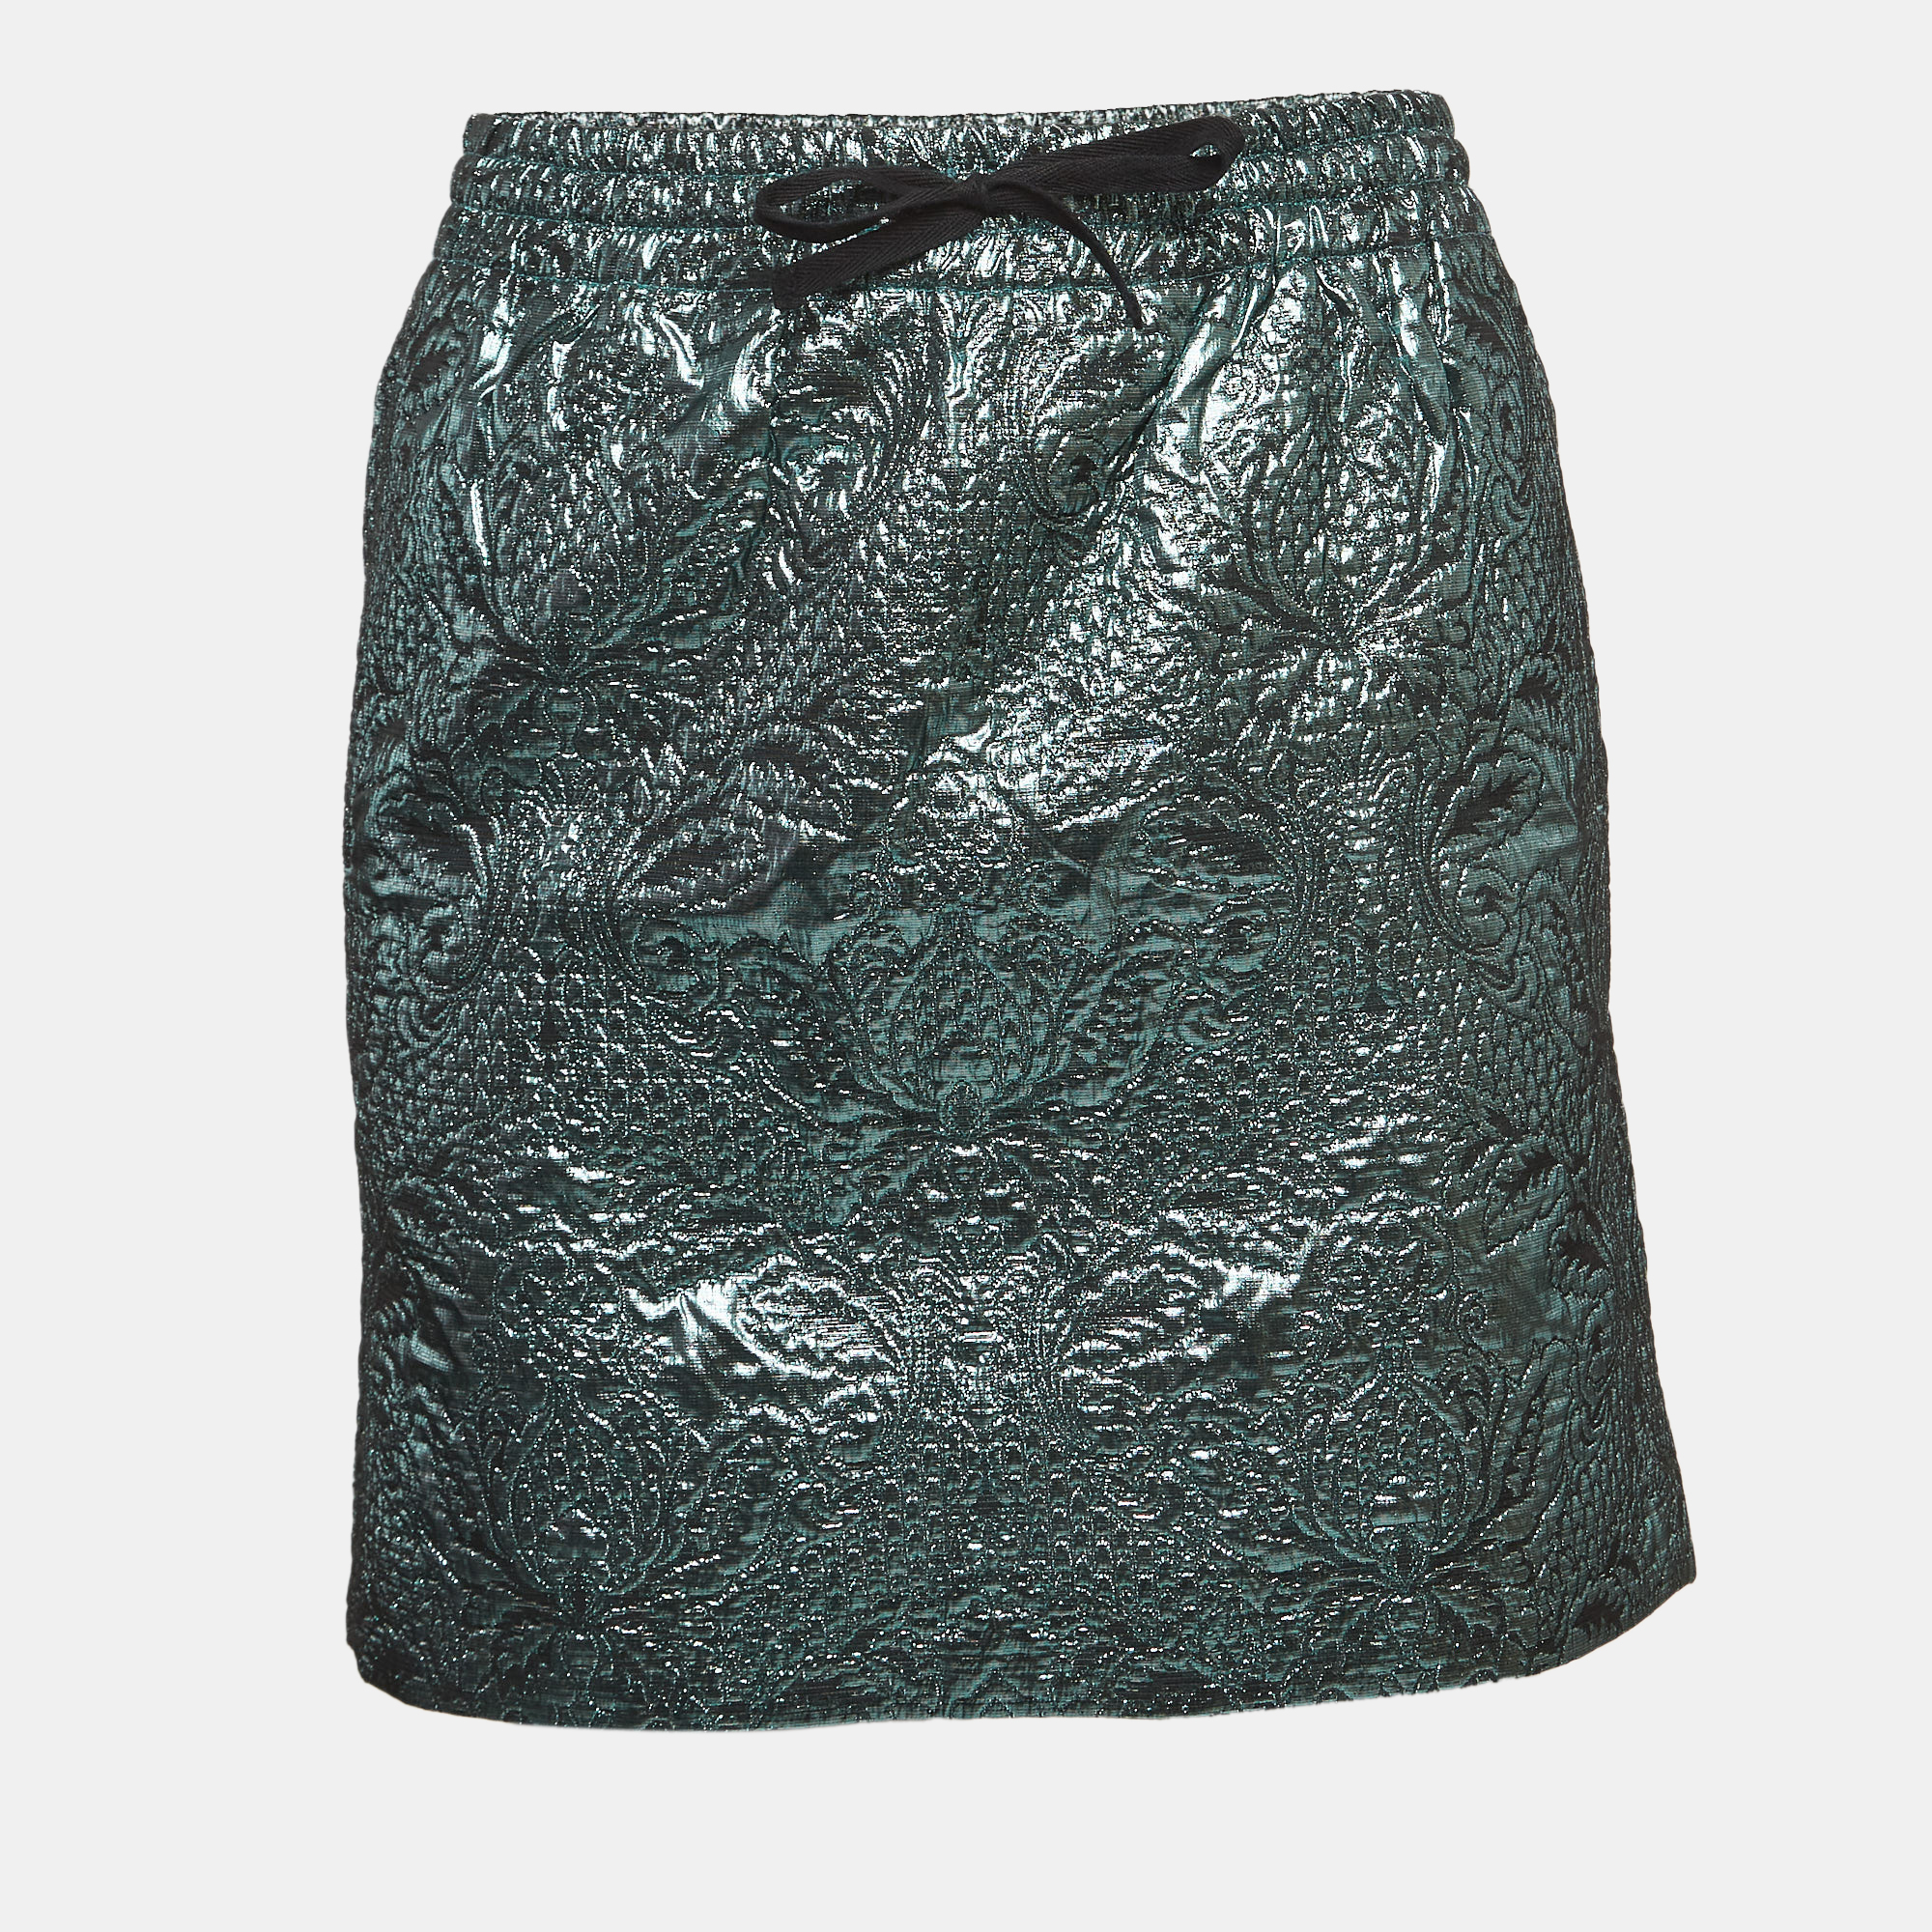 Zadig & voltaire metallic blue floral textured lurex drawstring mini skirt s